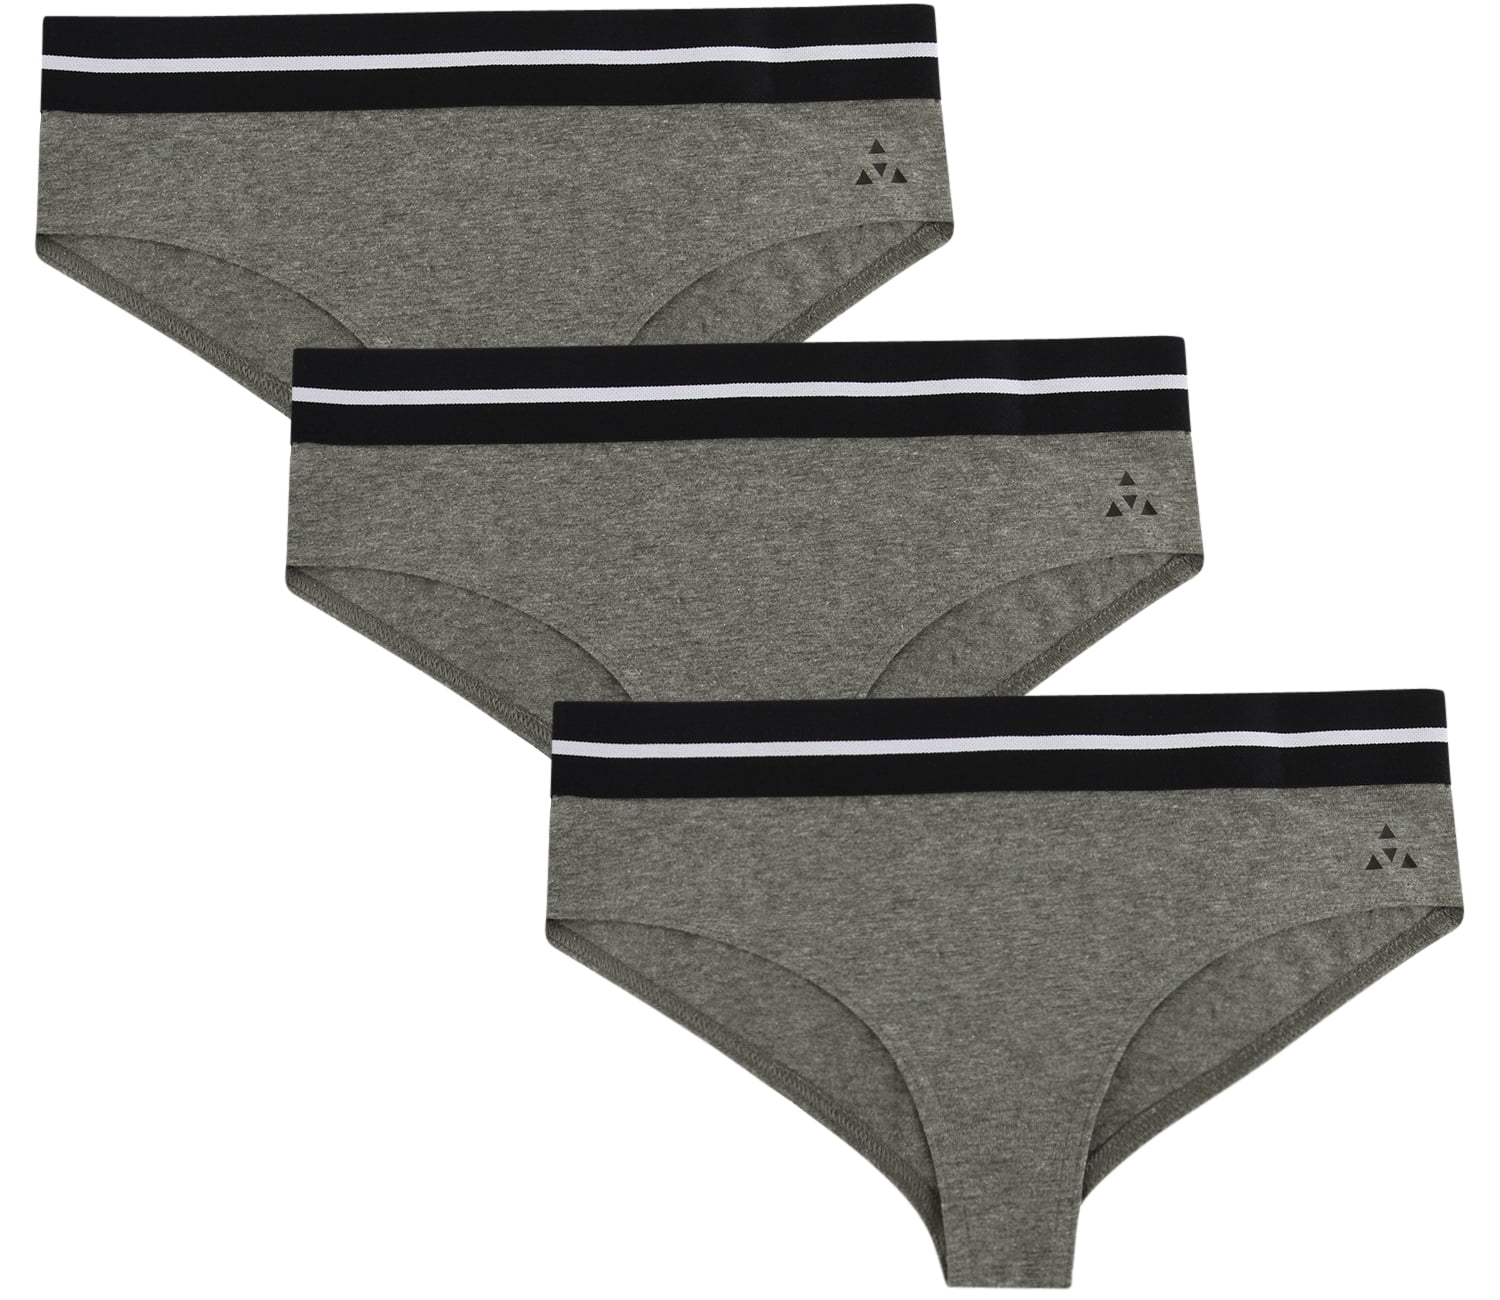 Balanced Tech Women's Soft Cotton Bikini Panties Underwear 3 Pack